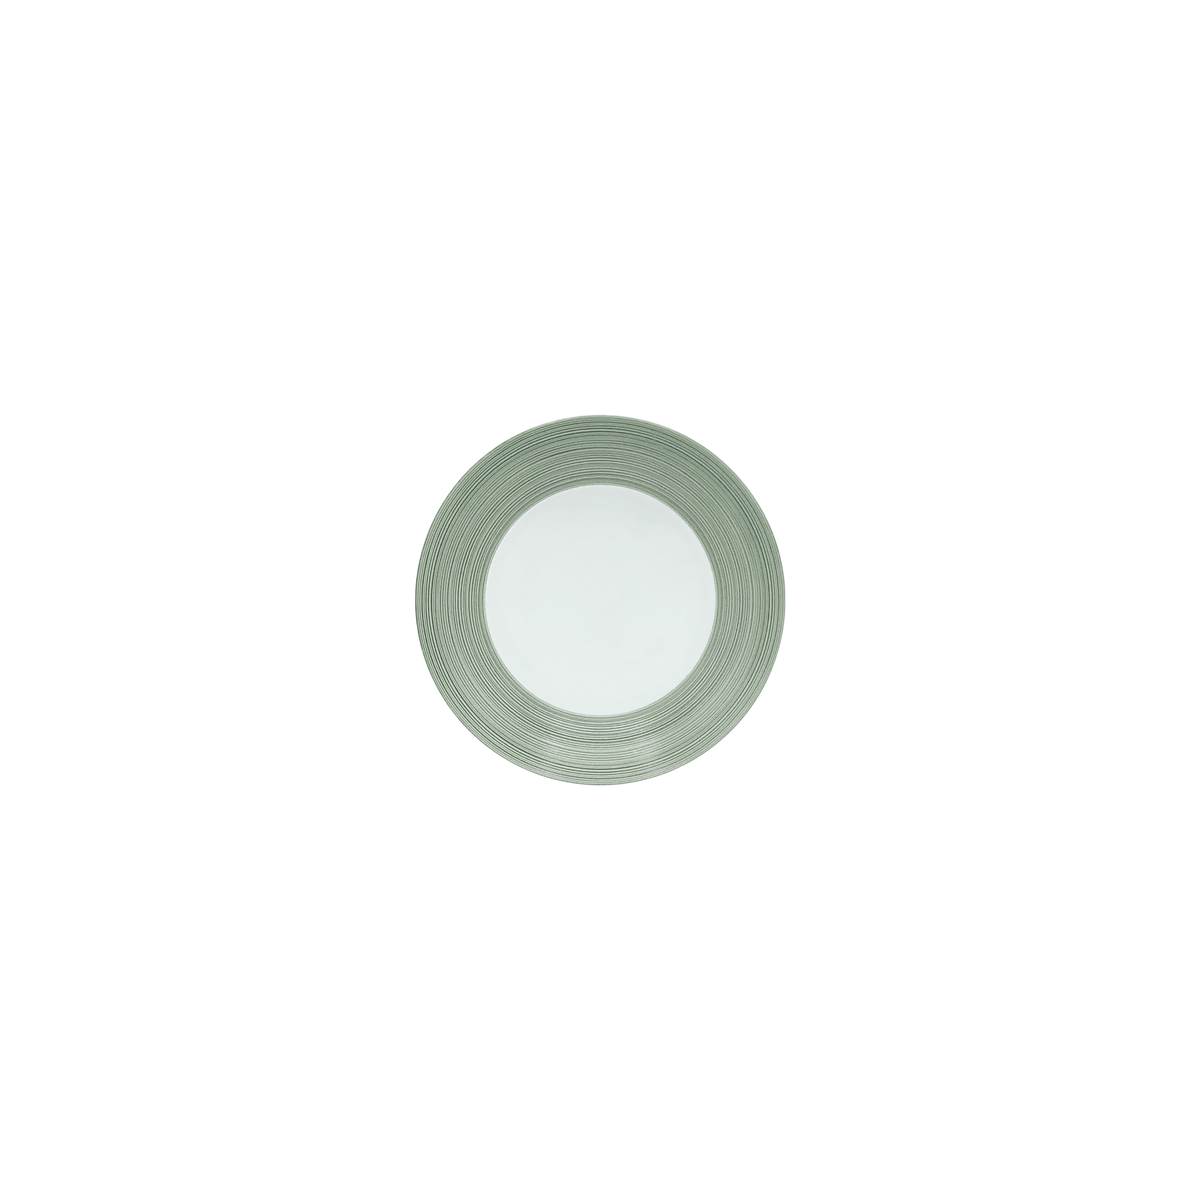 HEMISPHERE Khaki green - 10 Asian plate